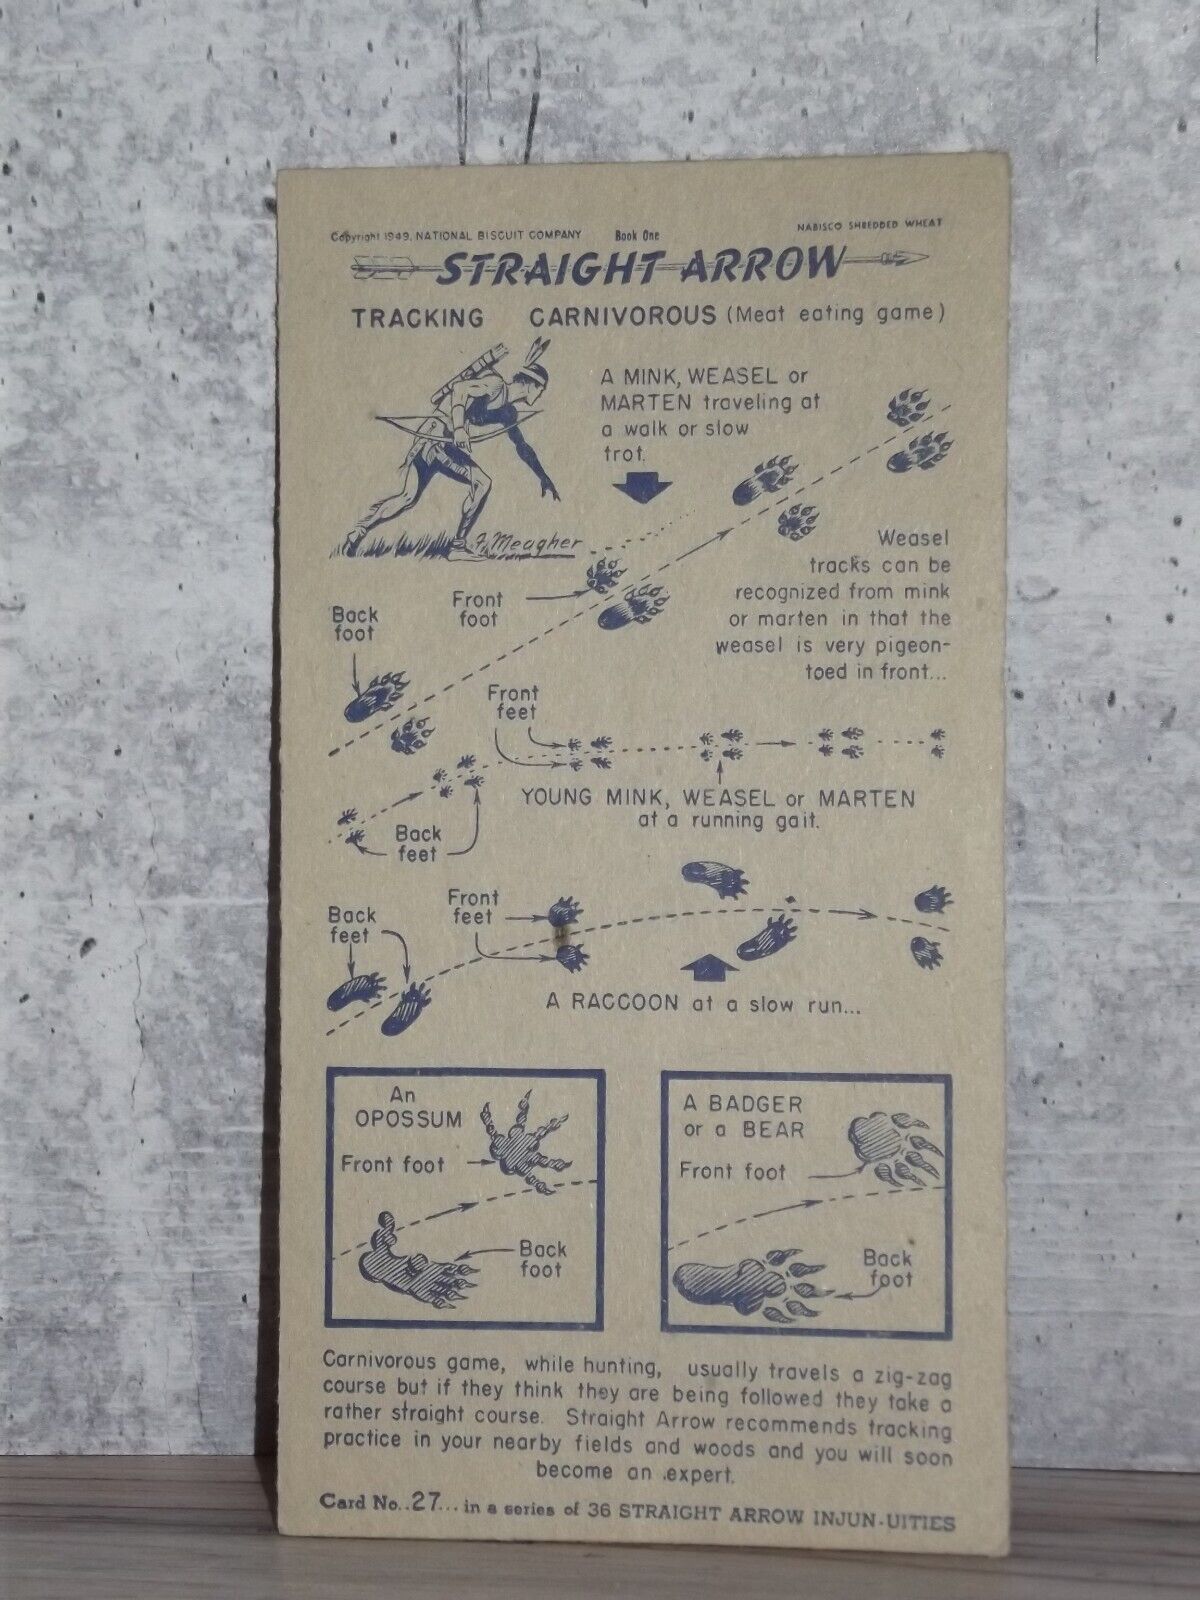 Nabisco Shredded Wheat Straight Arrow Indian Book 1 Card 27 Tracking  1949 5924